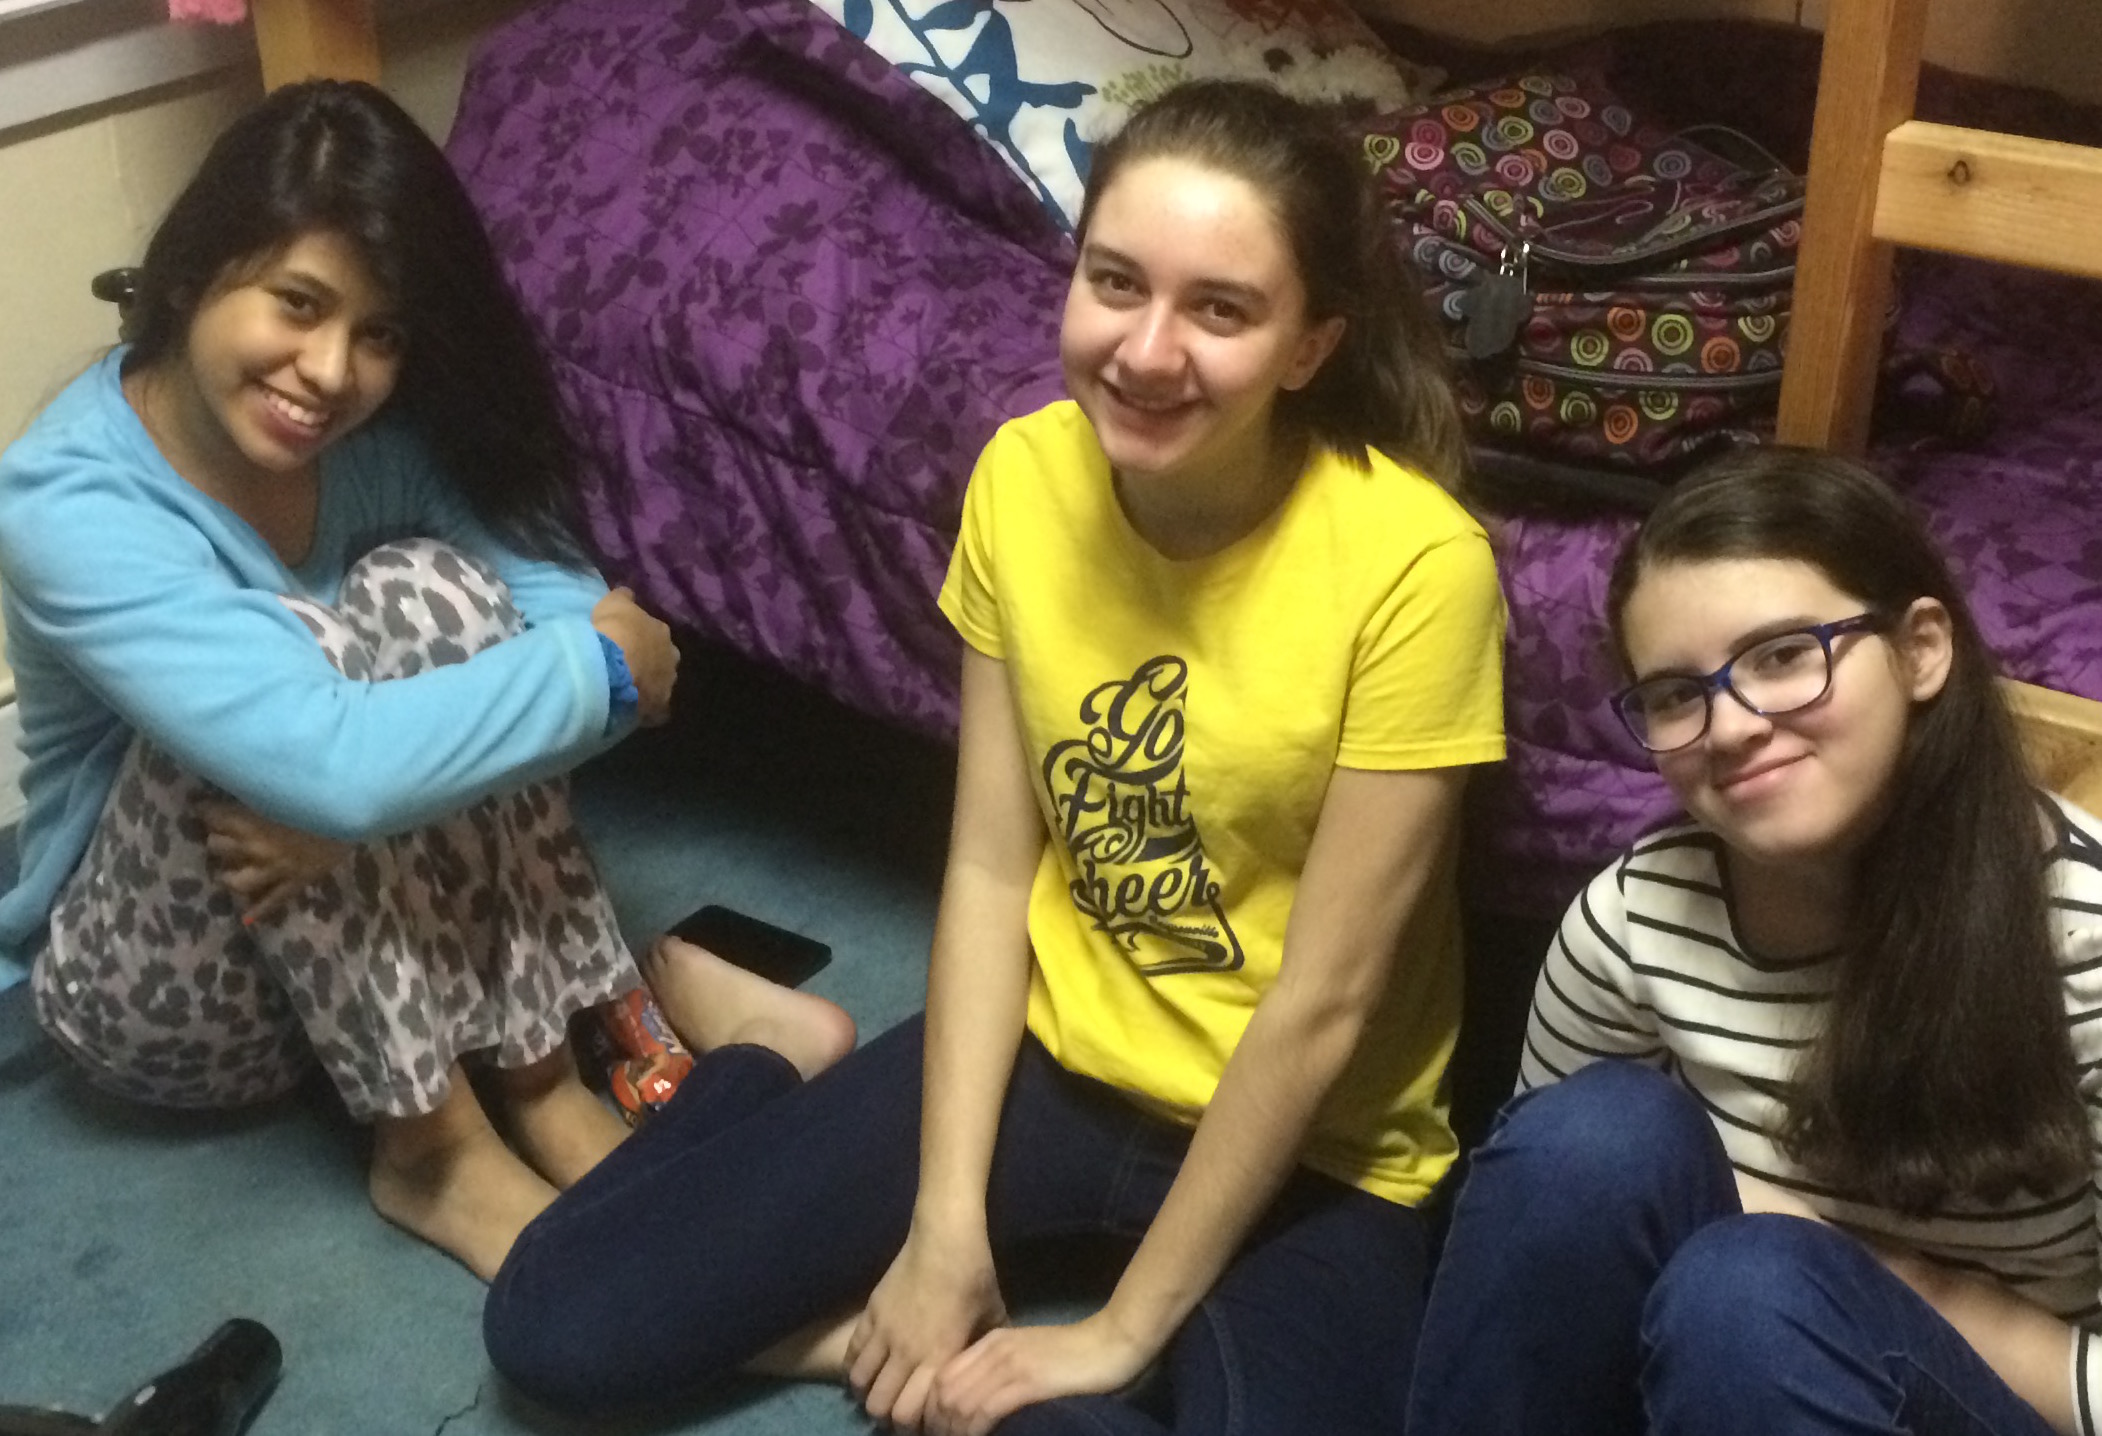 christian boarding school students, in the dorm, make lifelong friendships